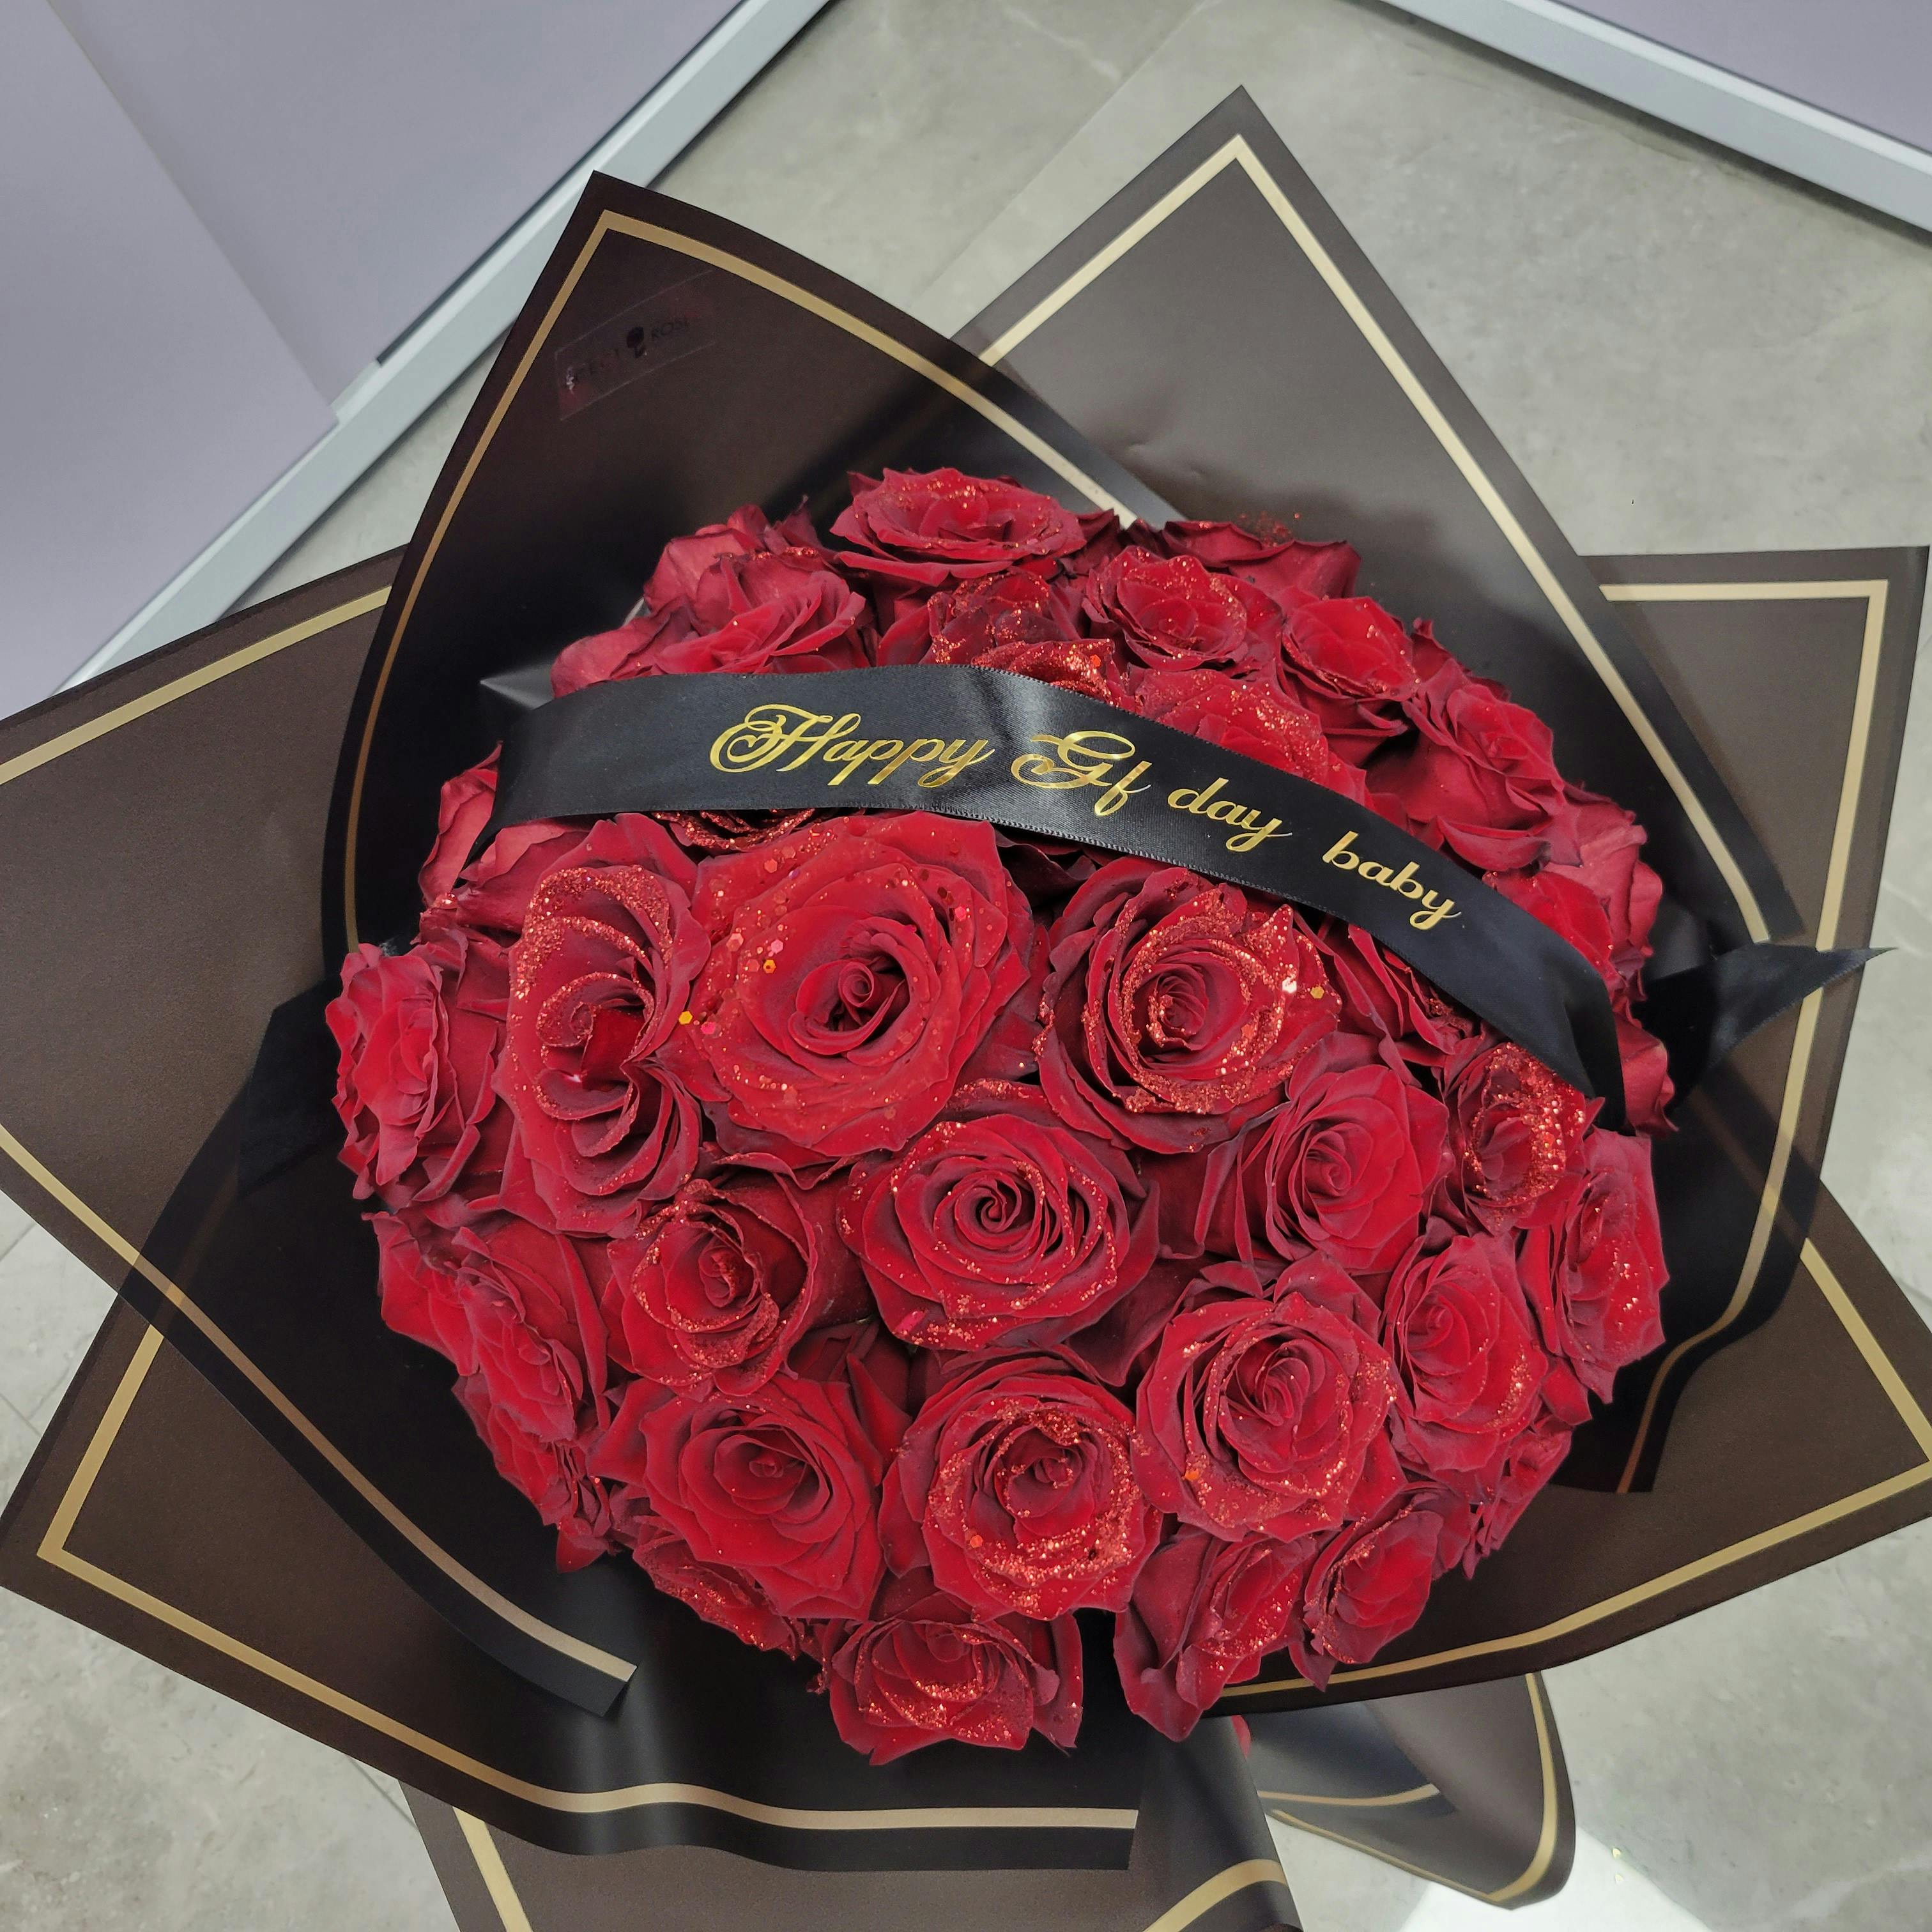  Bouchon & Heart Bouquet of 100 Roses